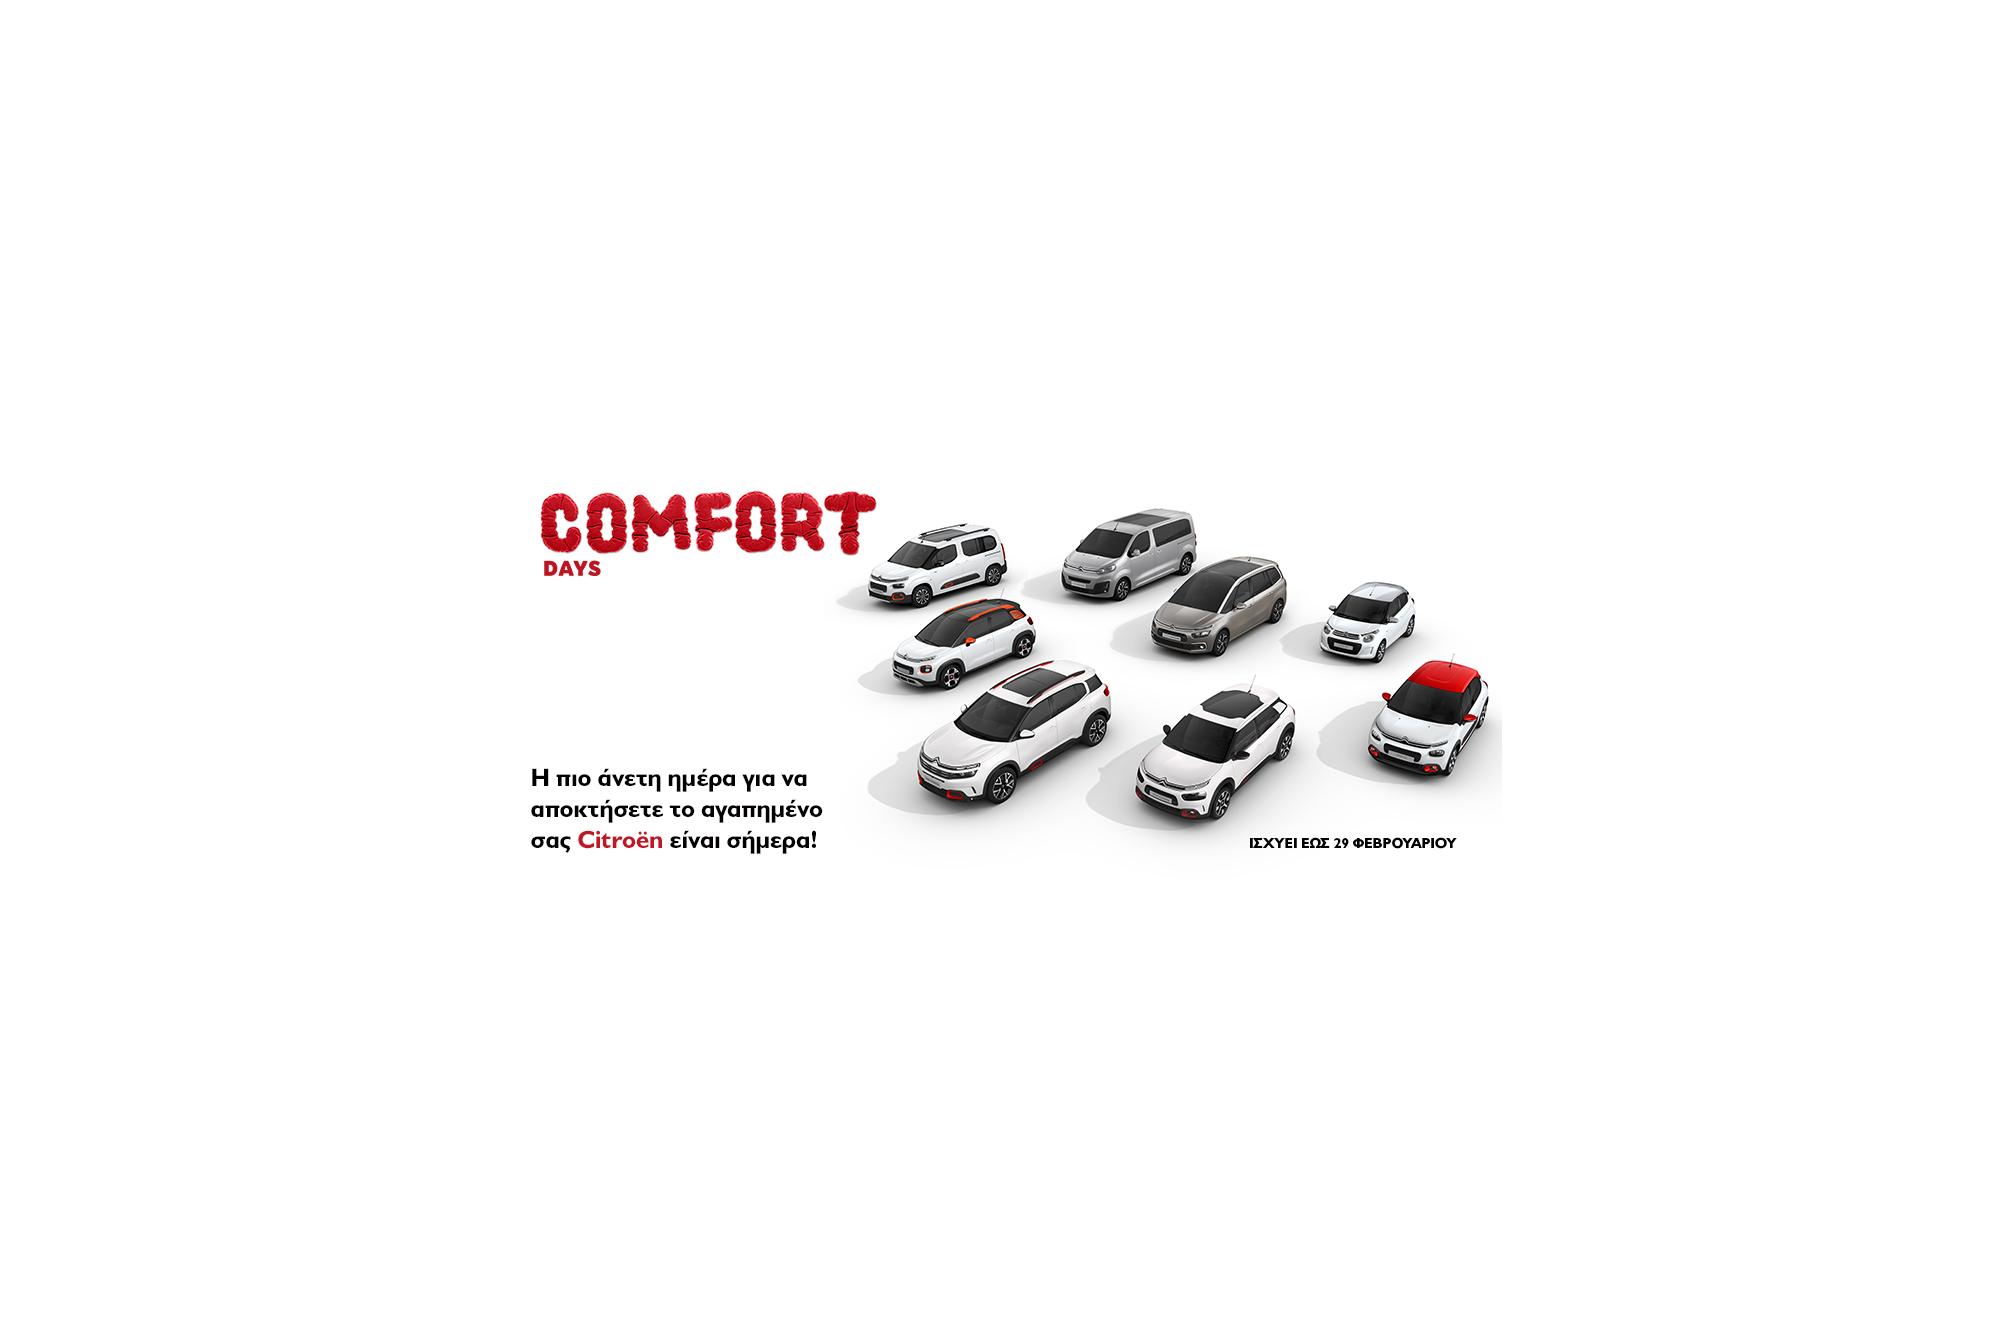 Citroën comfort days!